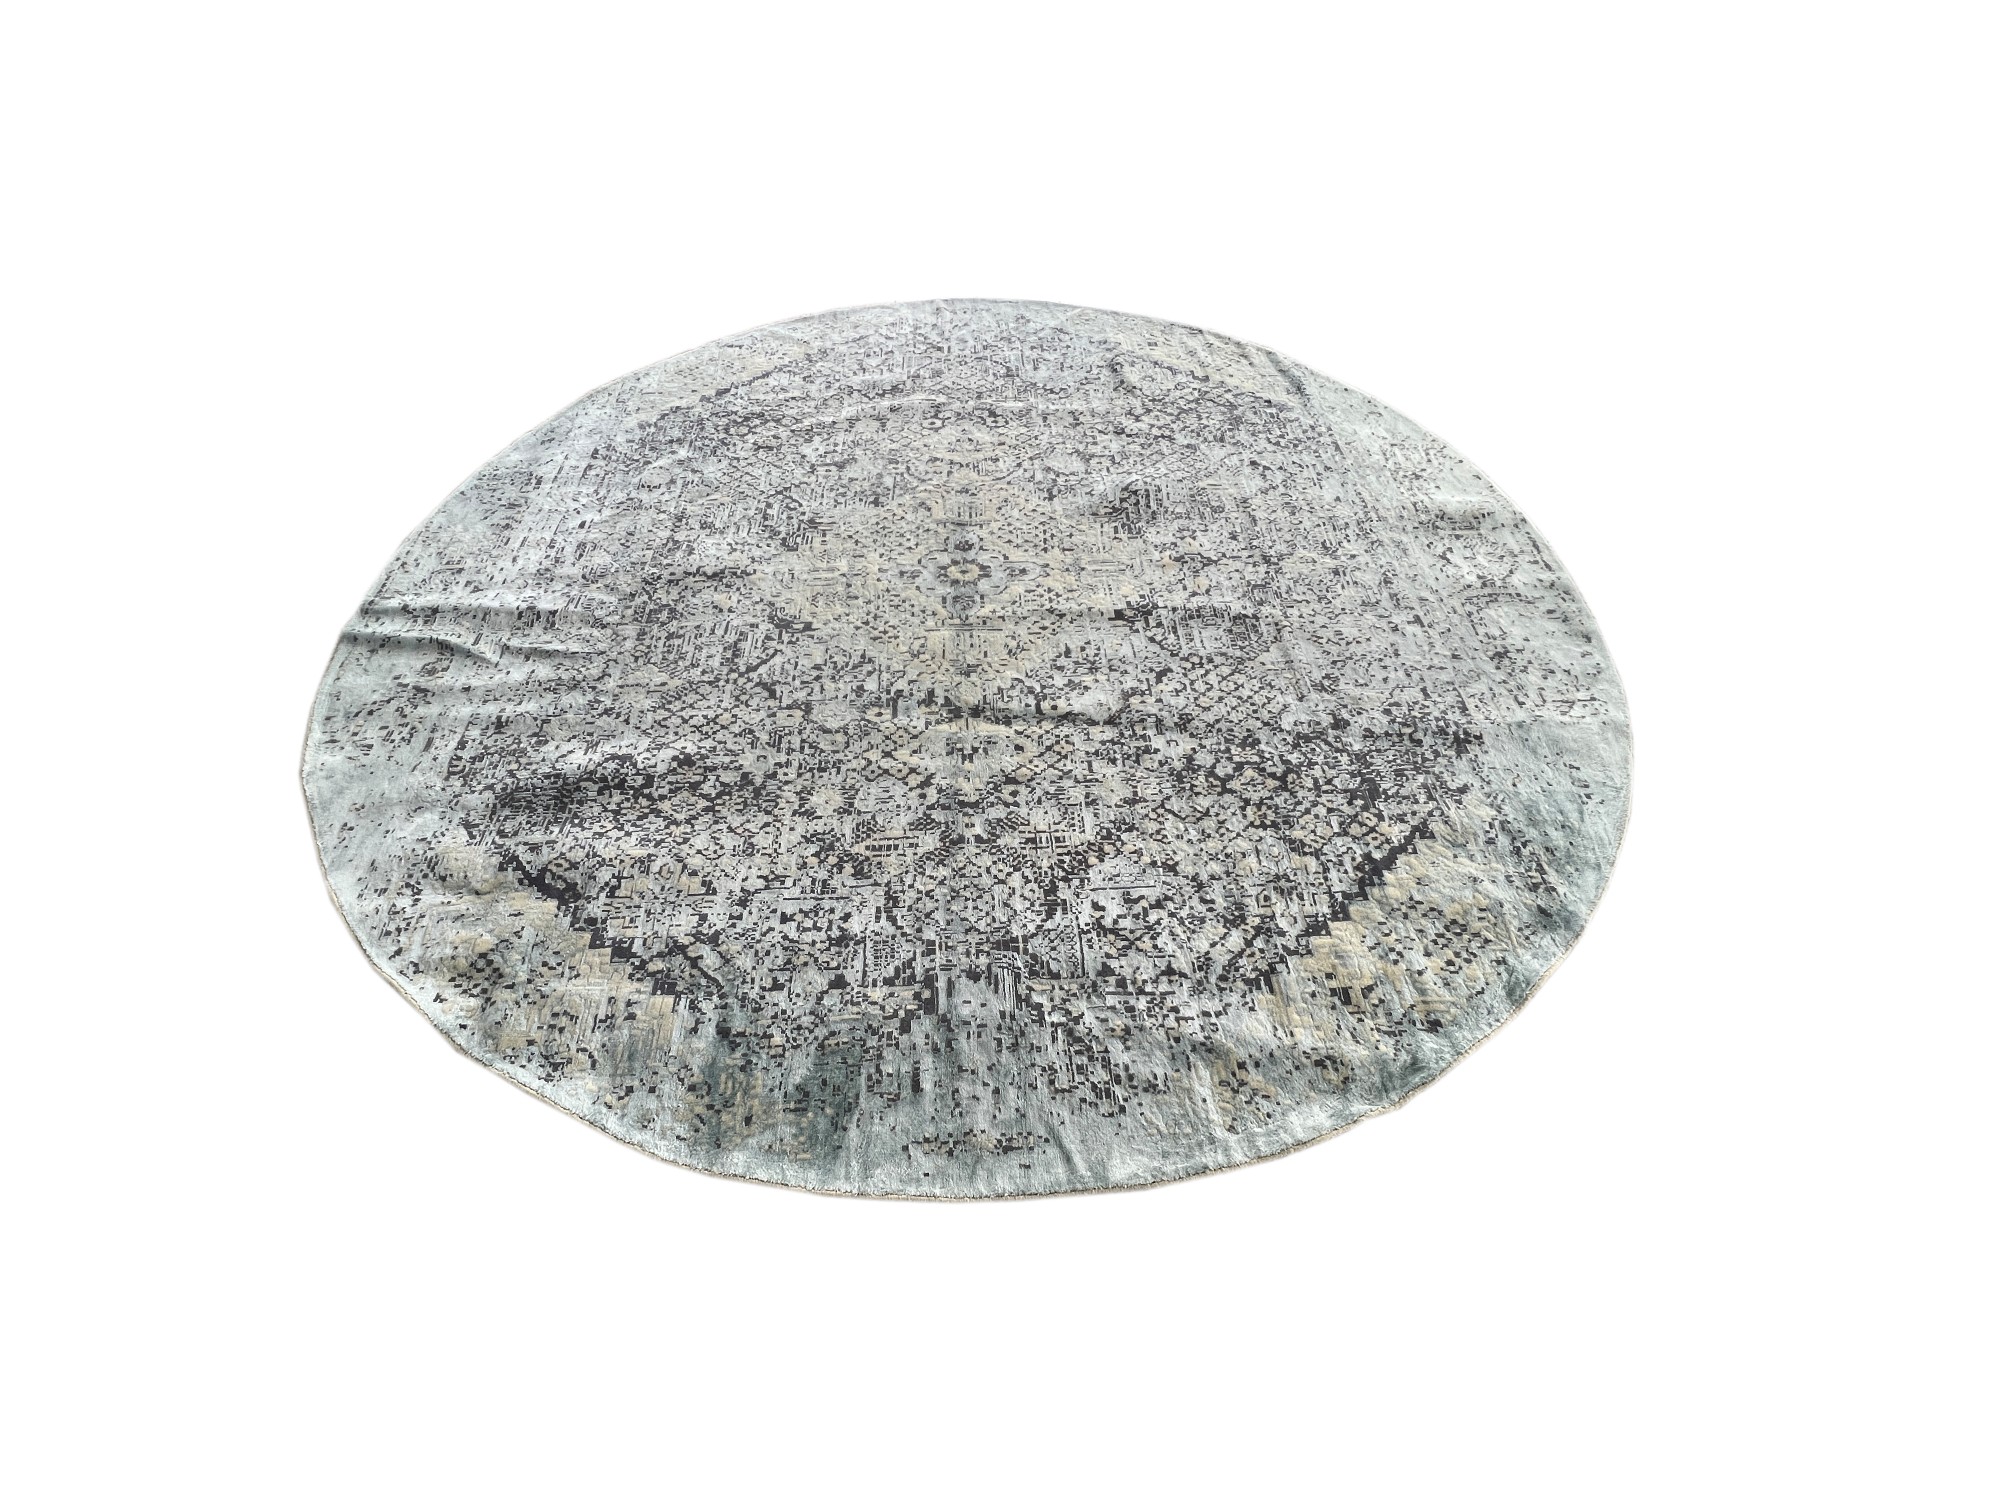 فرش پشمی ماشینی طبیعی و ارگانیک کد 0020 - زمینه آبی کم رنگ - حاشیه طوسی پر رنگ